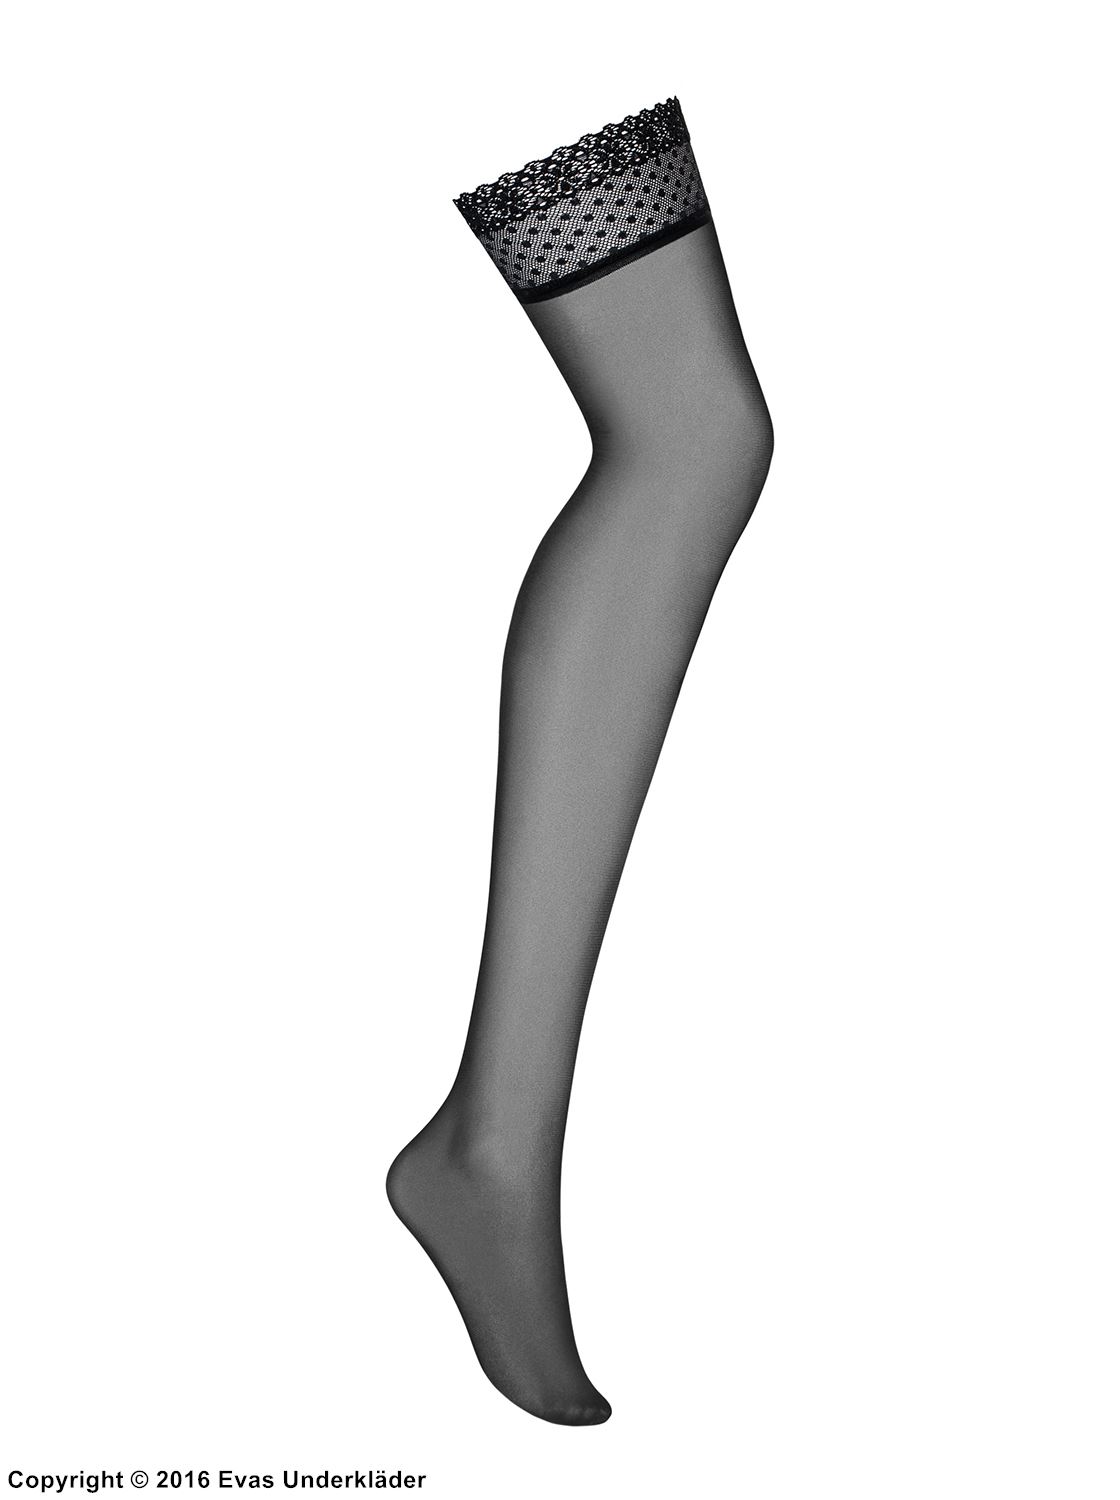 Romantic stockings, lace edge, small dots